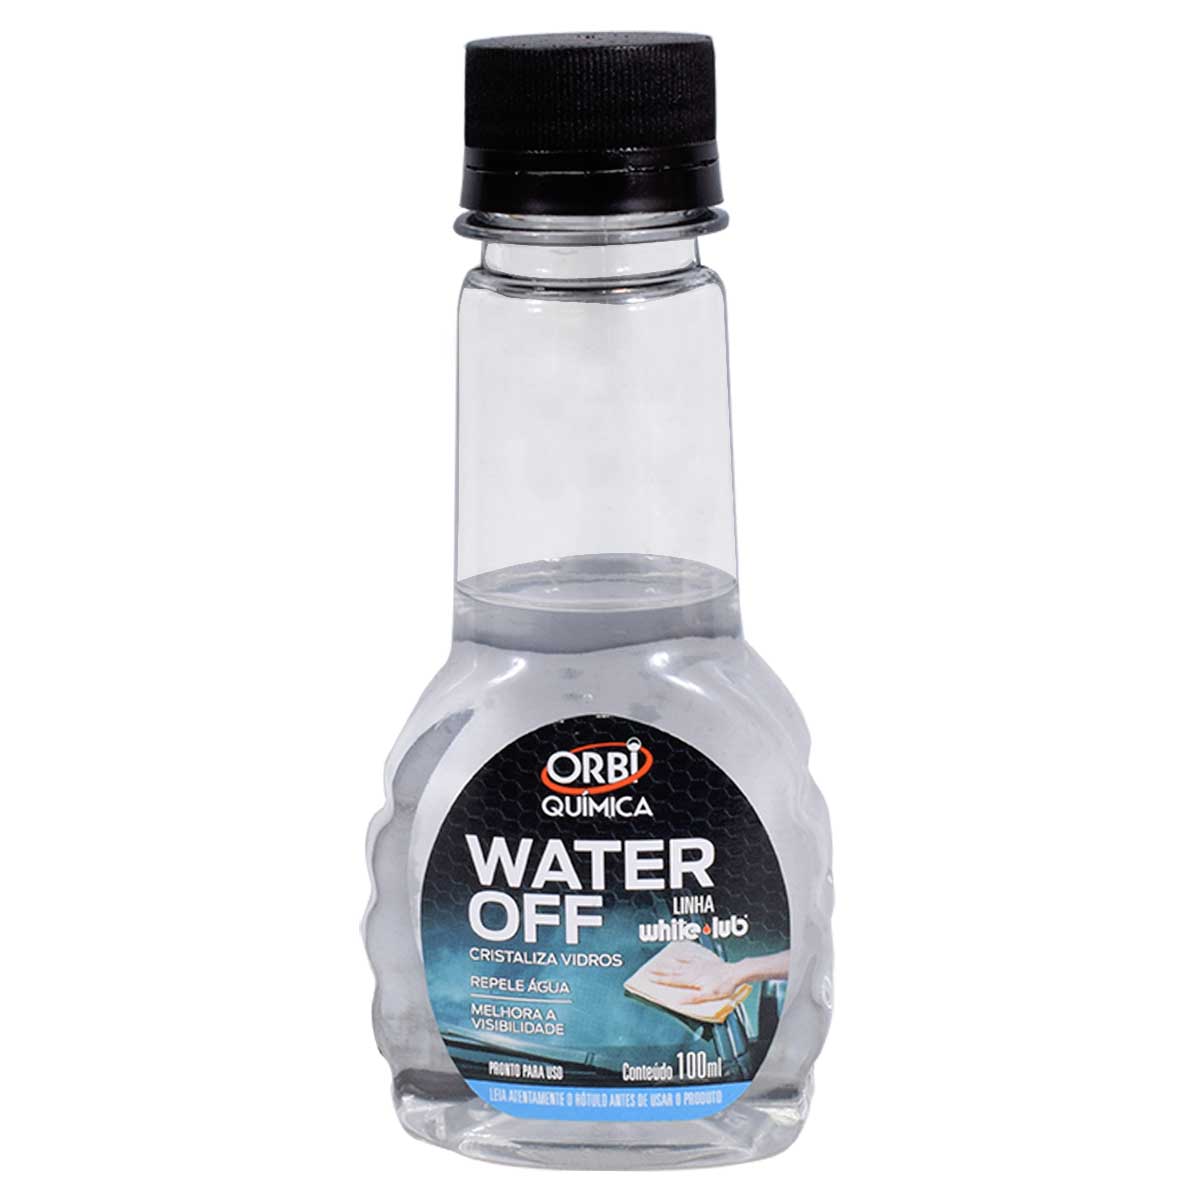 Water Off Cristalizador Impermeabiliza Vidros 100ml Orbi 